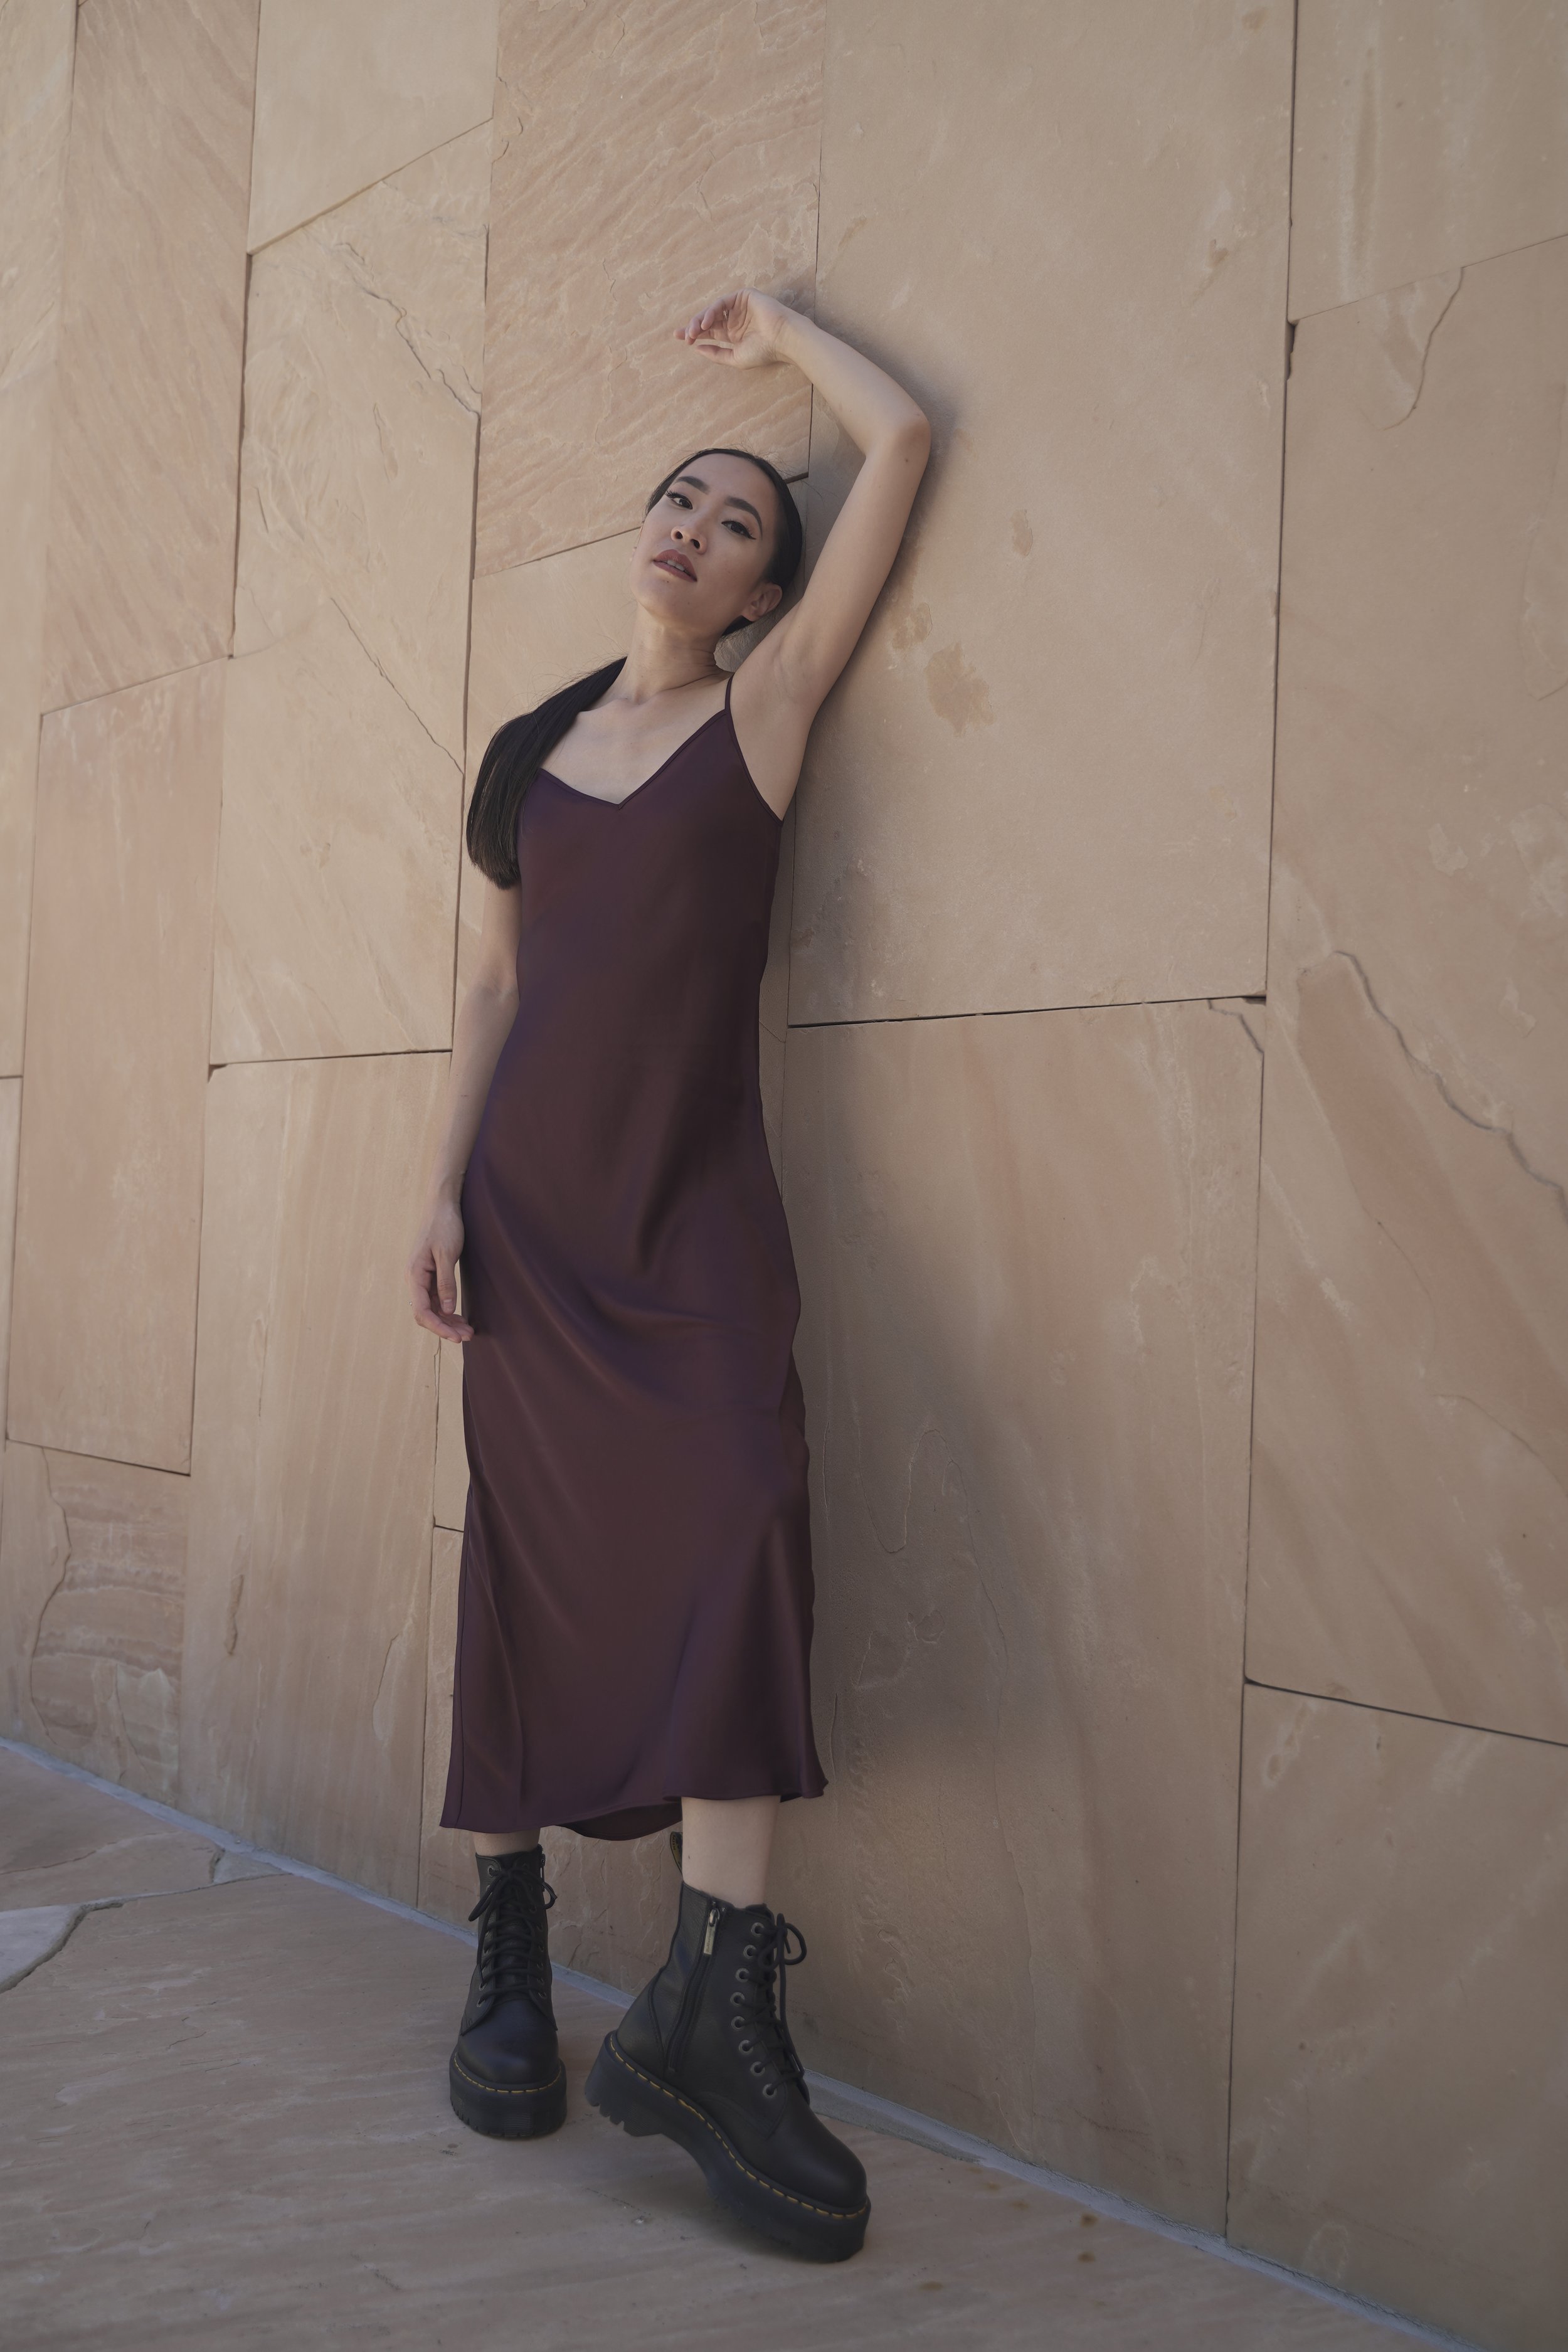 Slip Dress Against Stone Wall - Amanda N Hammond.JPG